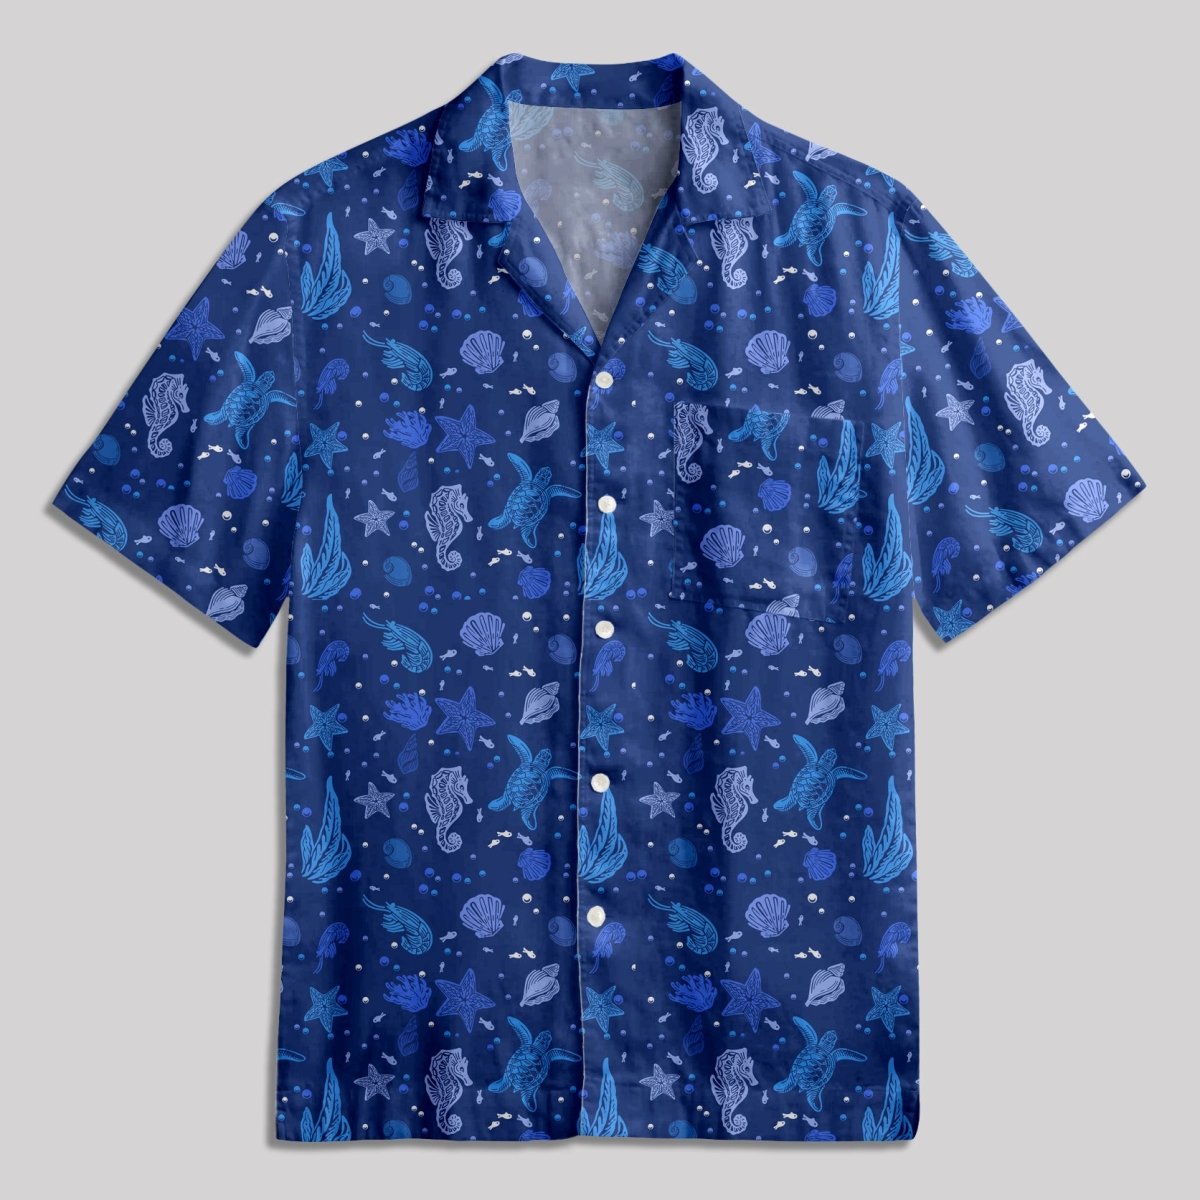 Marine Life Button Up Pocket Shirt - Geeksoutfit